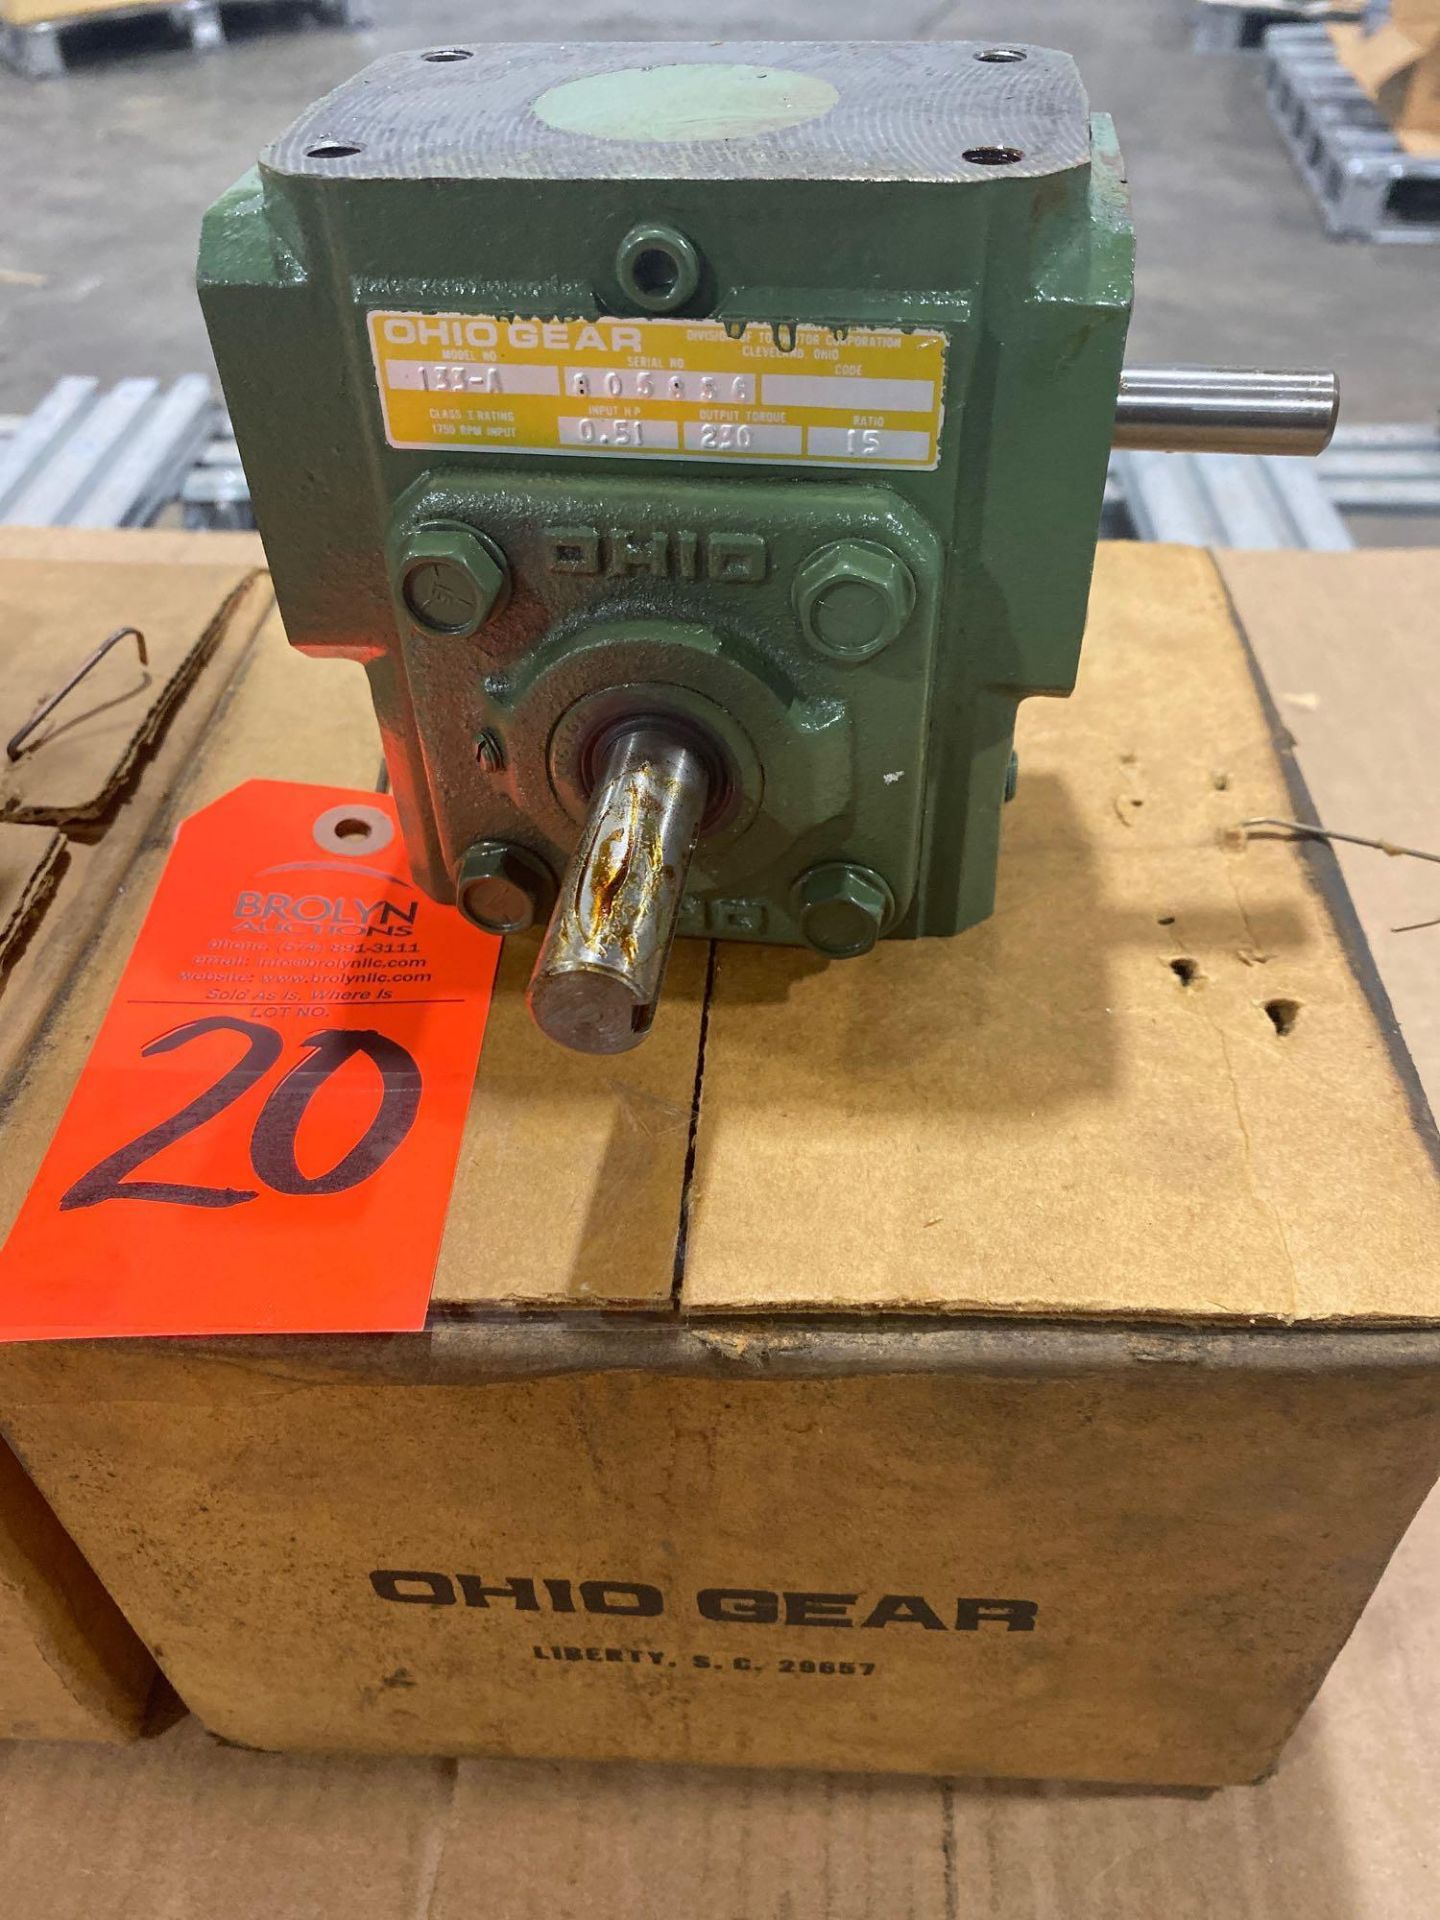 Ohio Gear model 133-A gearbox. 15:1 ratio. New in box.